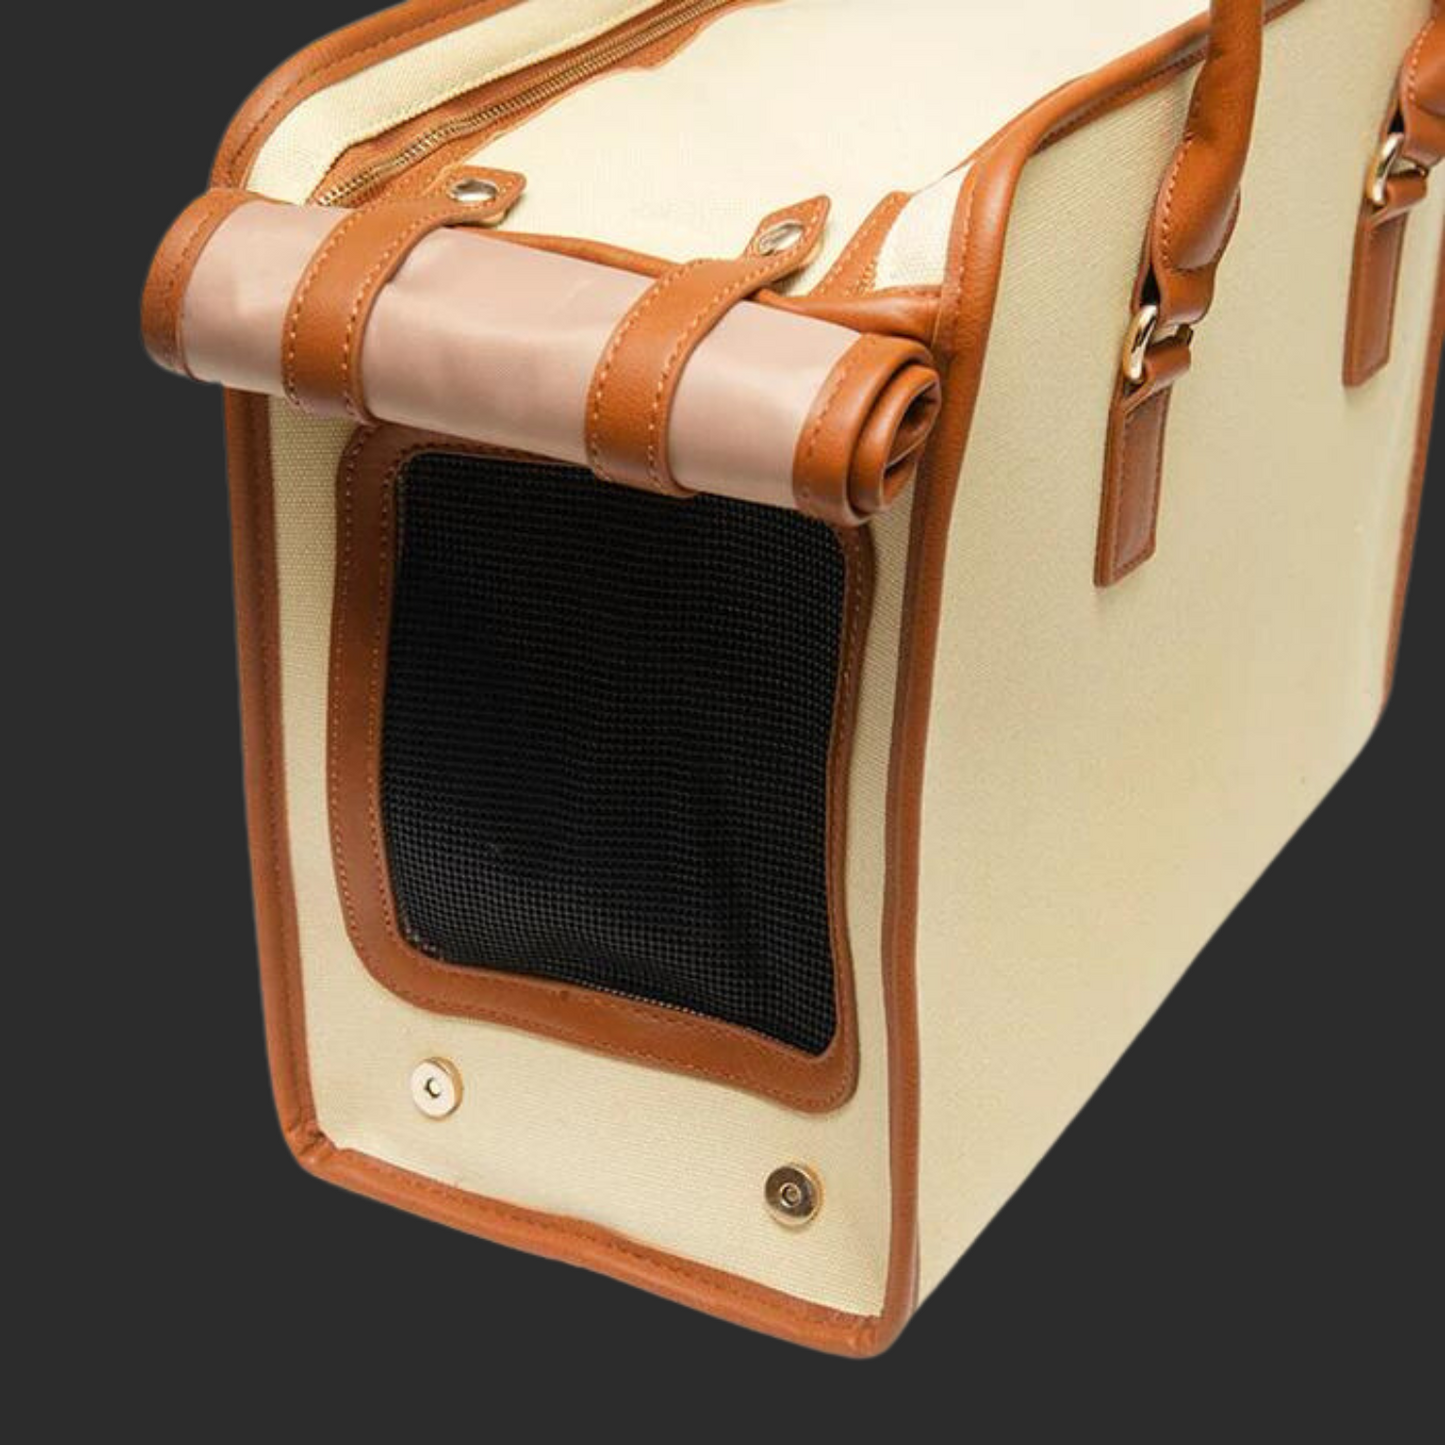 Classic Two-Tone Canvas Pet Carrier Bag